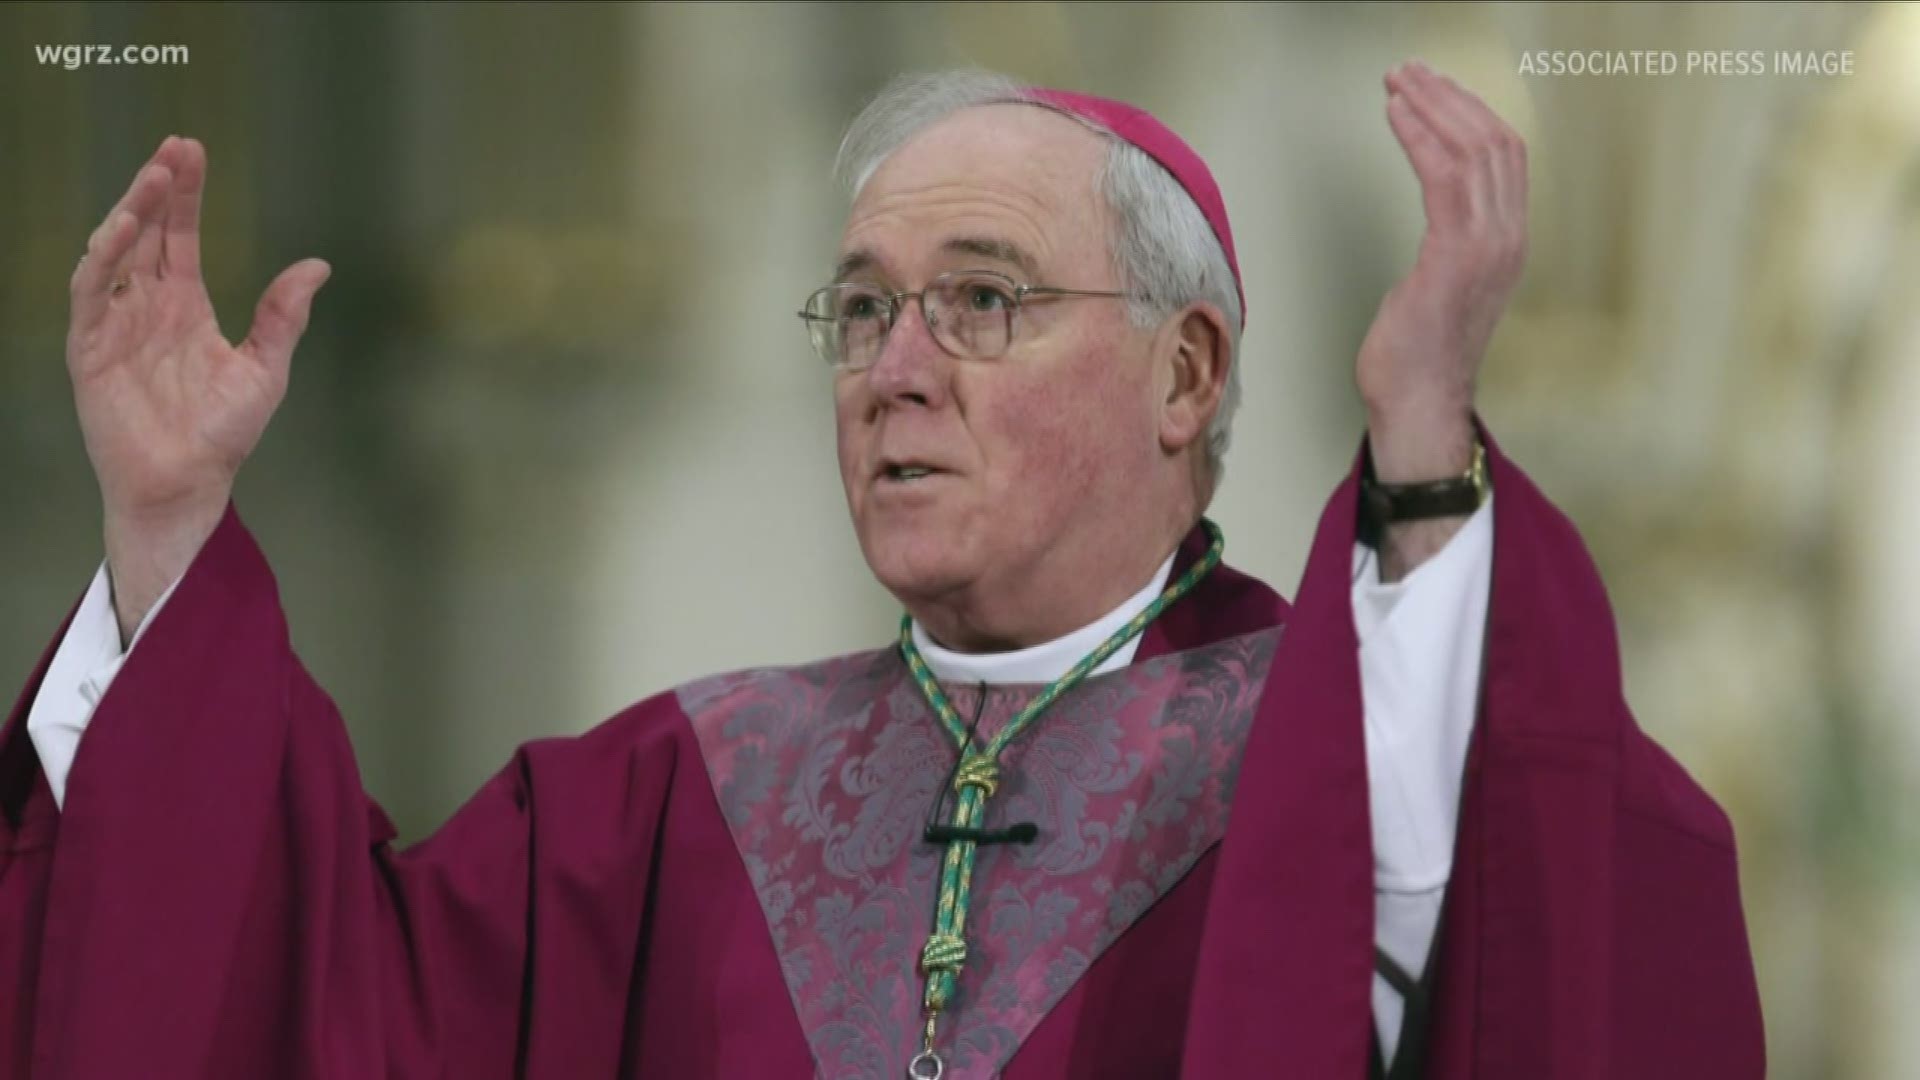 Reports: Bishop Malone will resign Wednesday